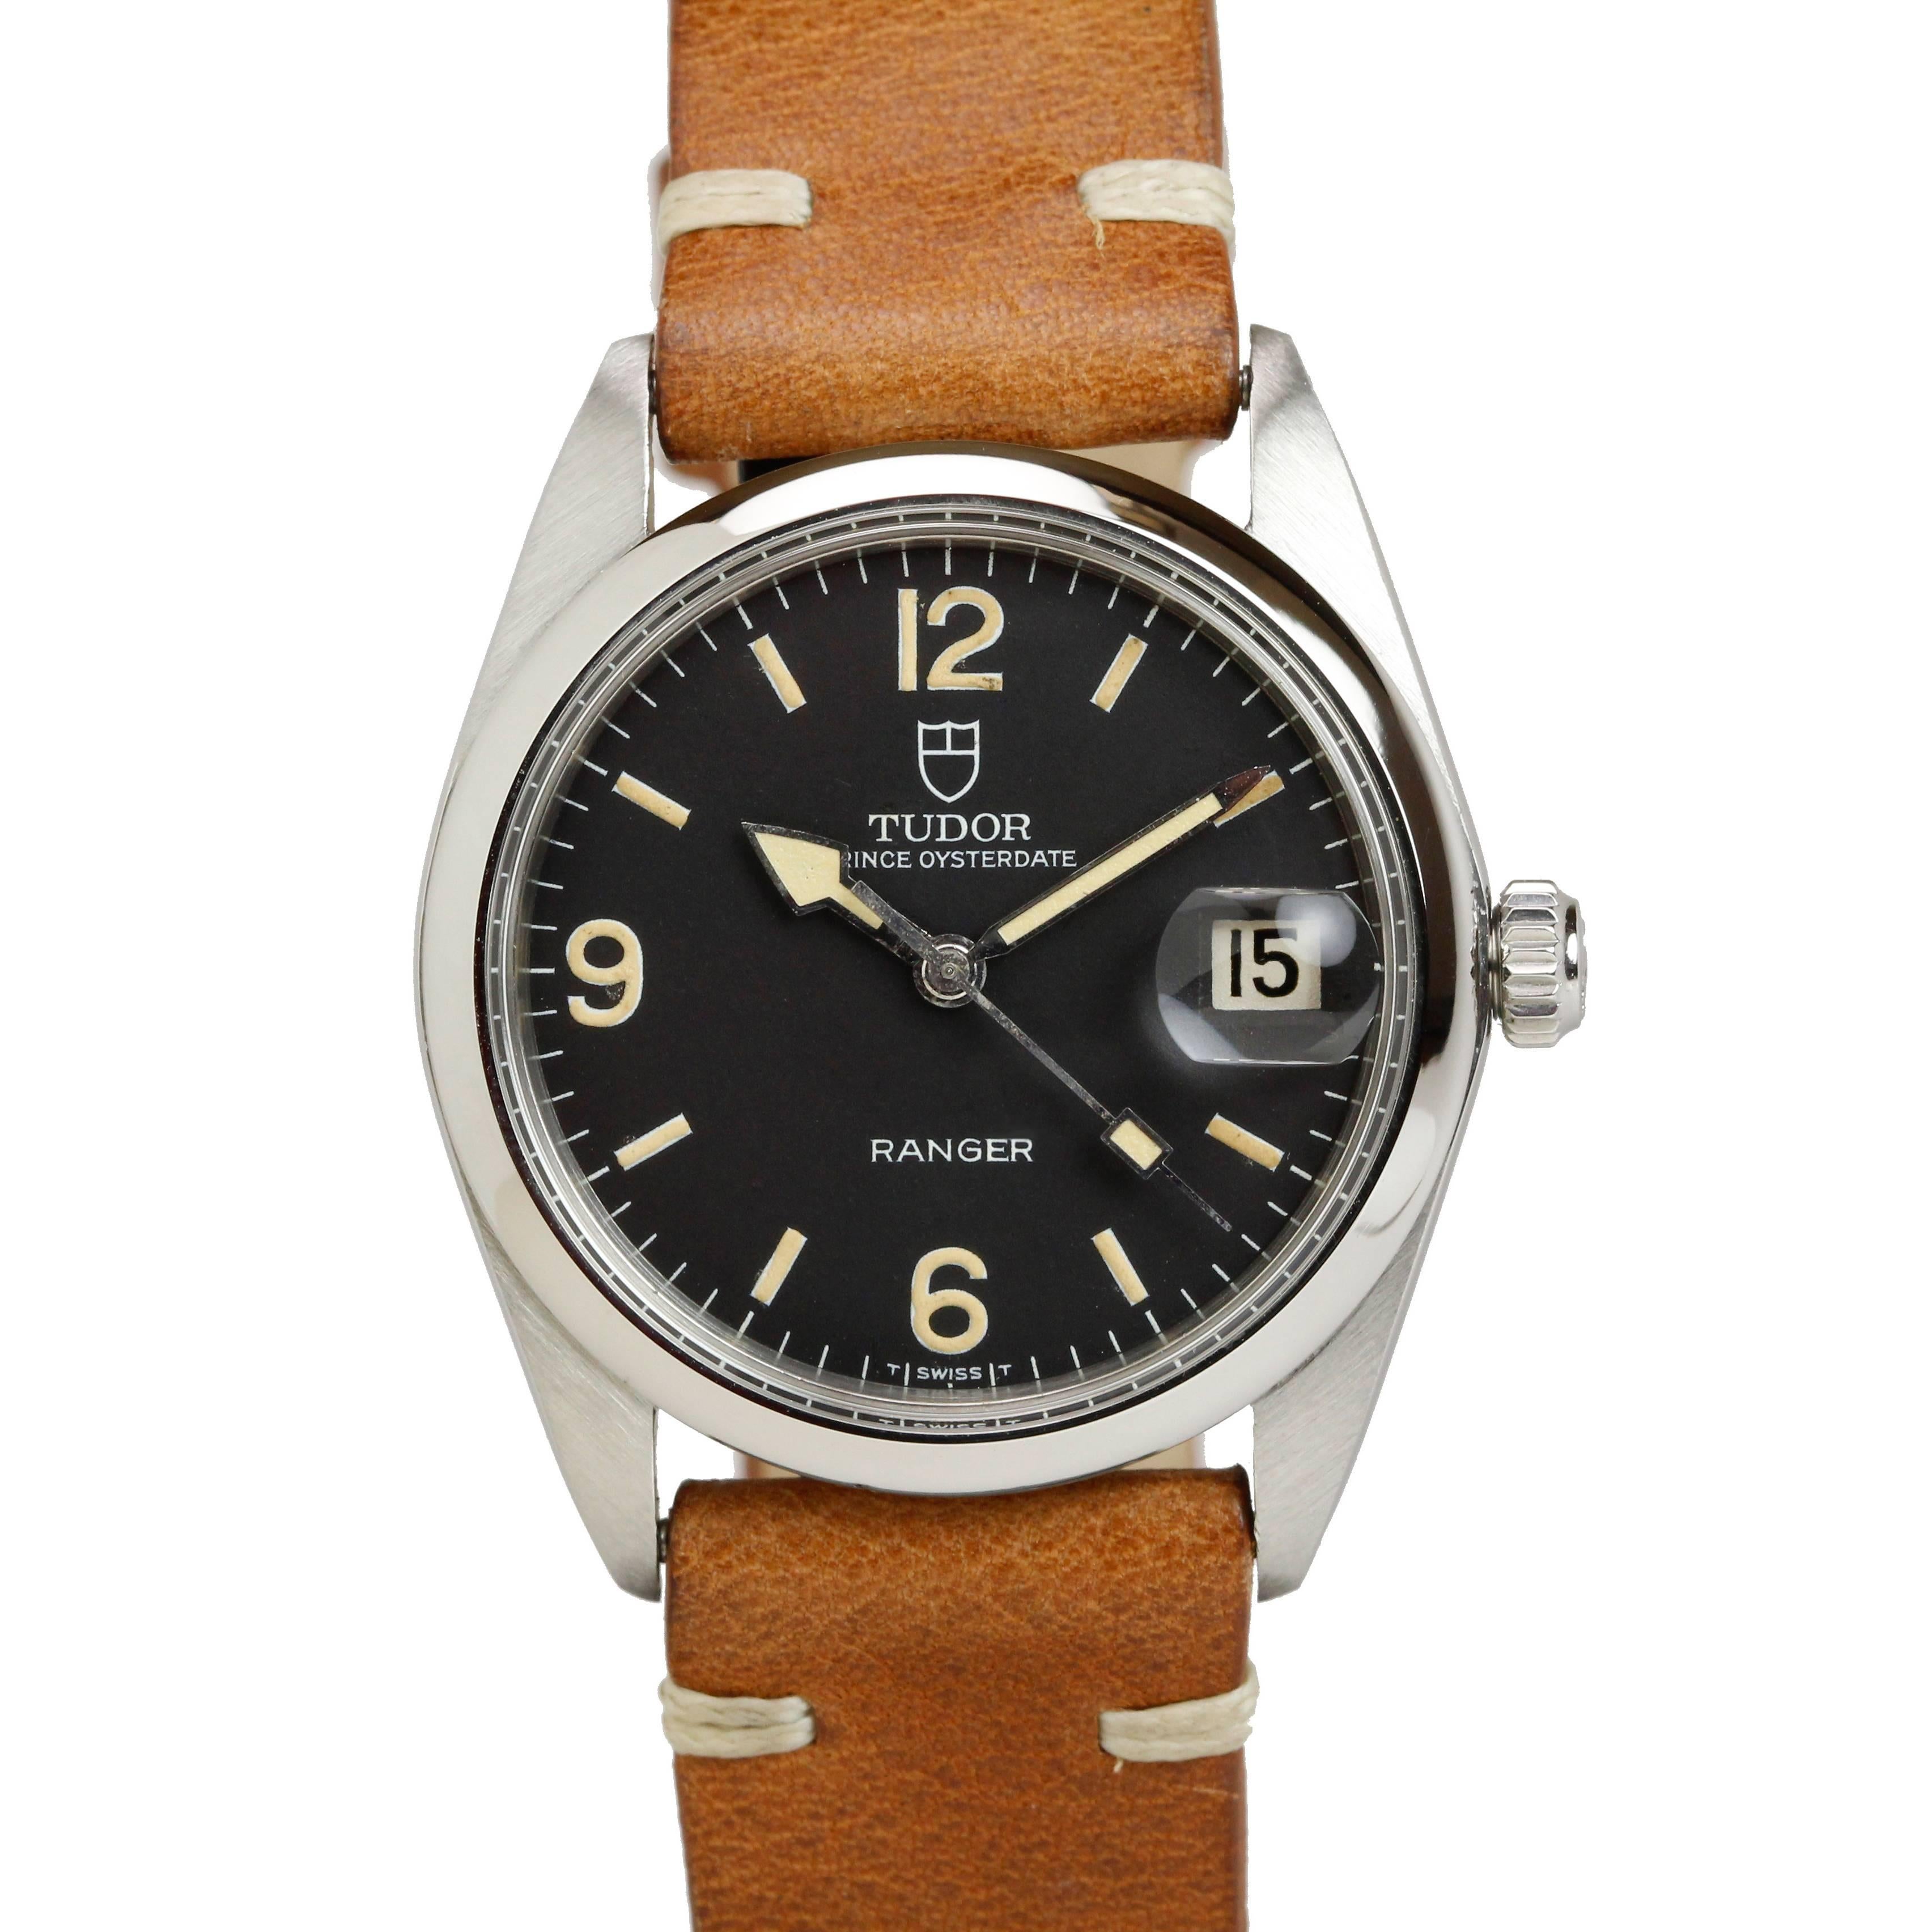 Tudor Stainless Steel Prince Oysterdate Ranger Wristwatch Ref 9050/0 